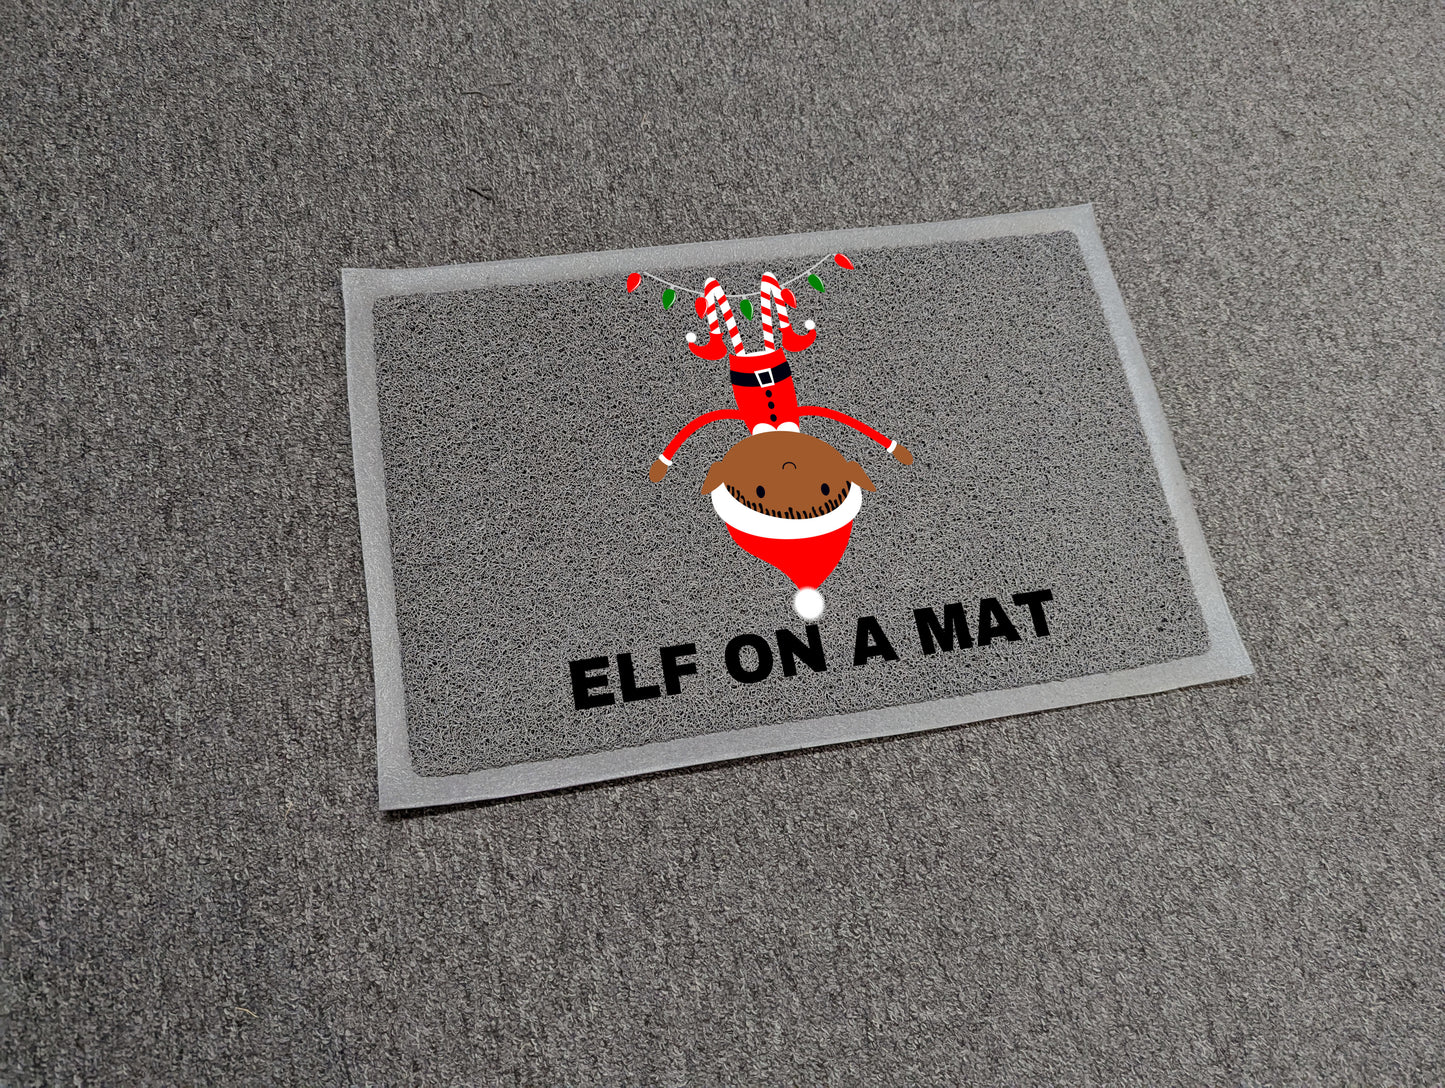 Elf on a mat christmas doormat - looped